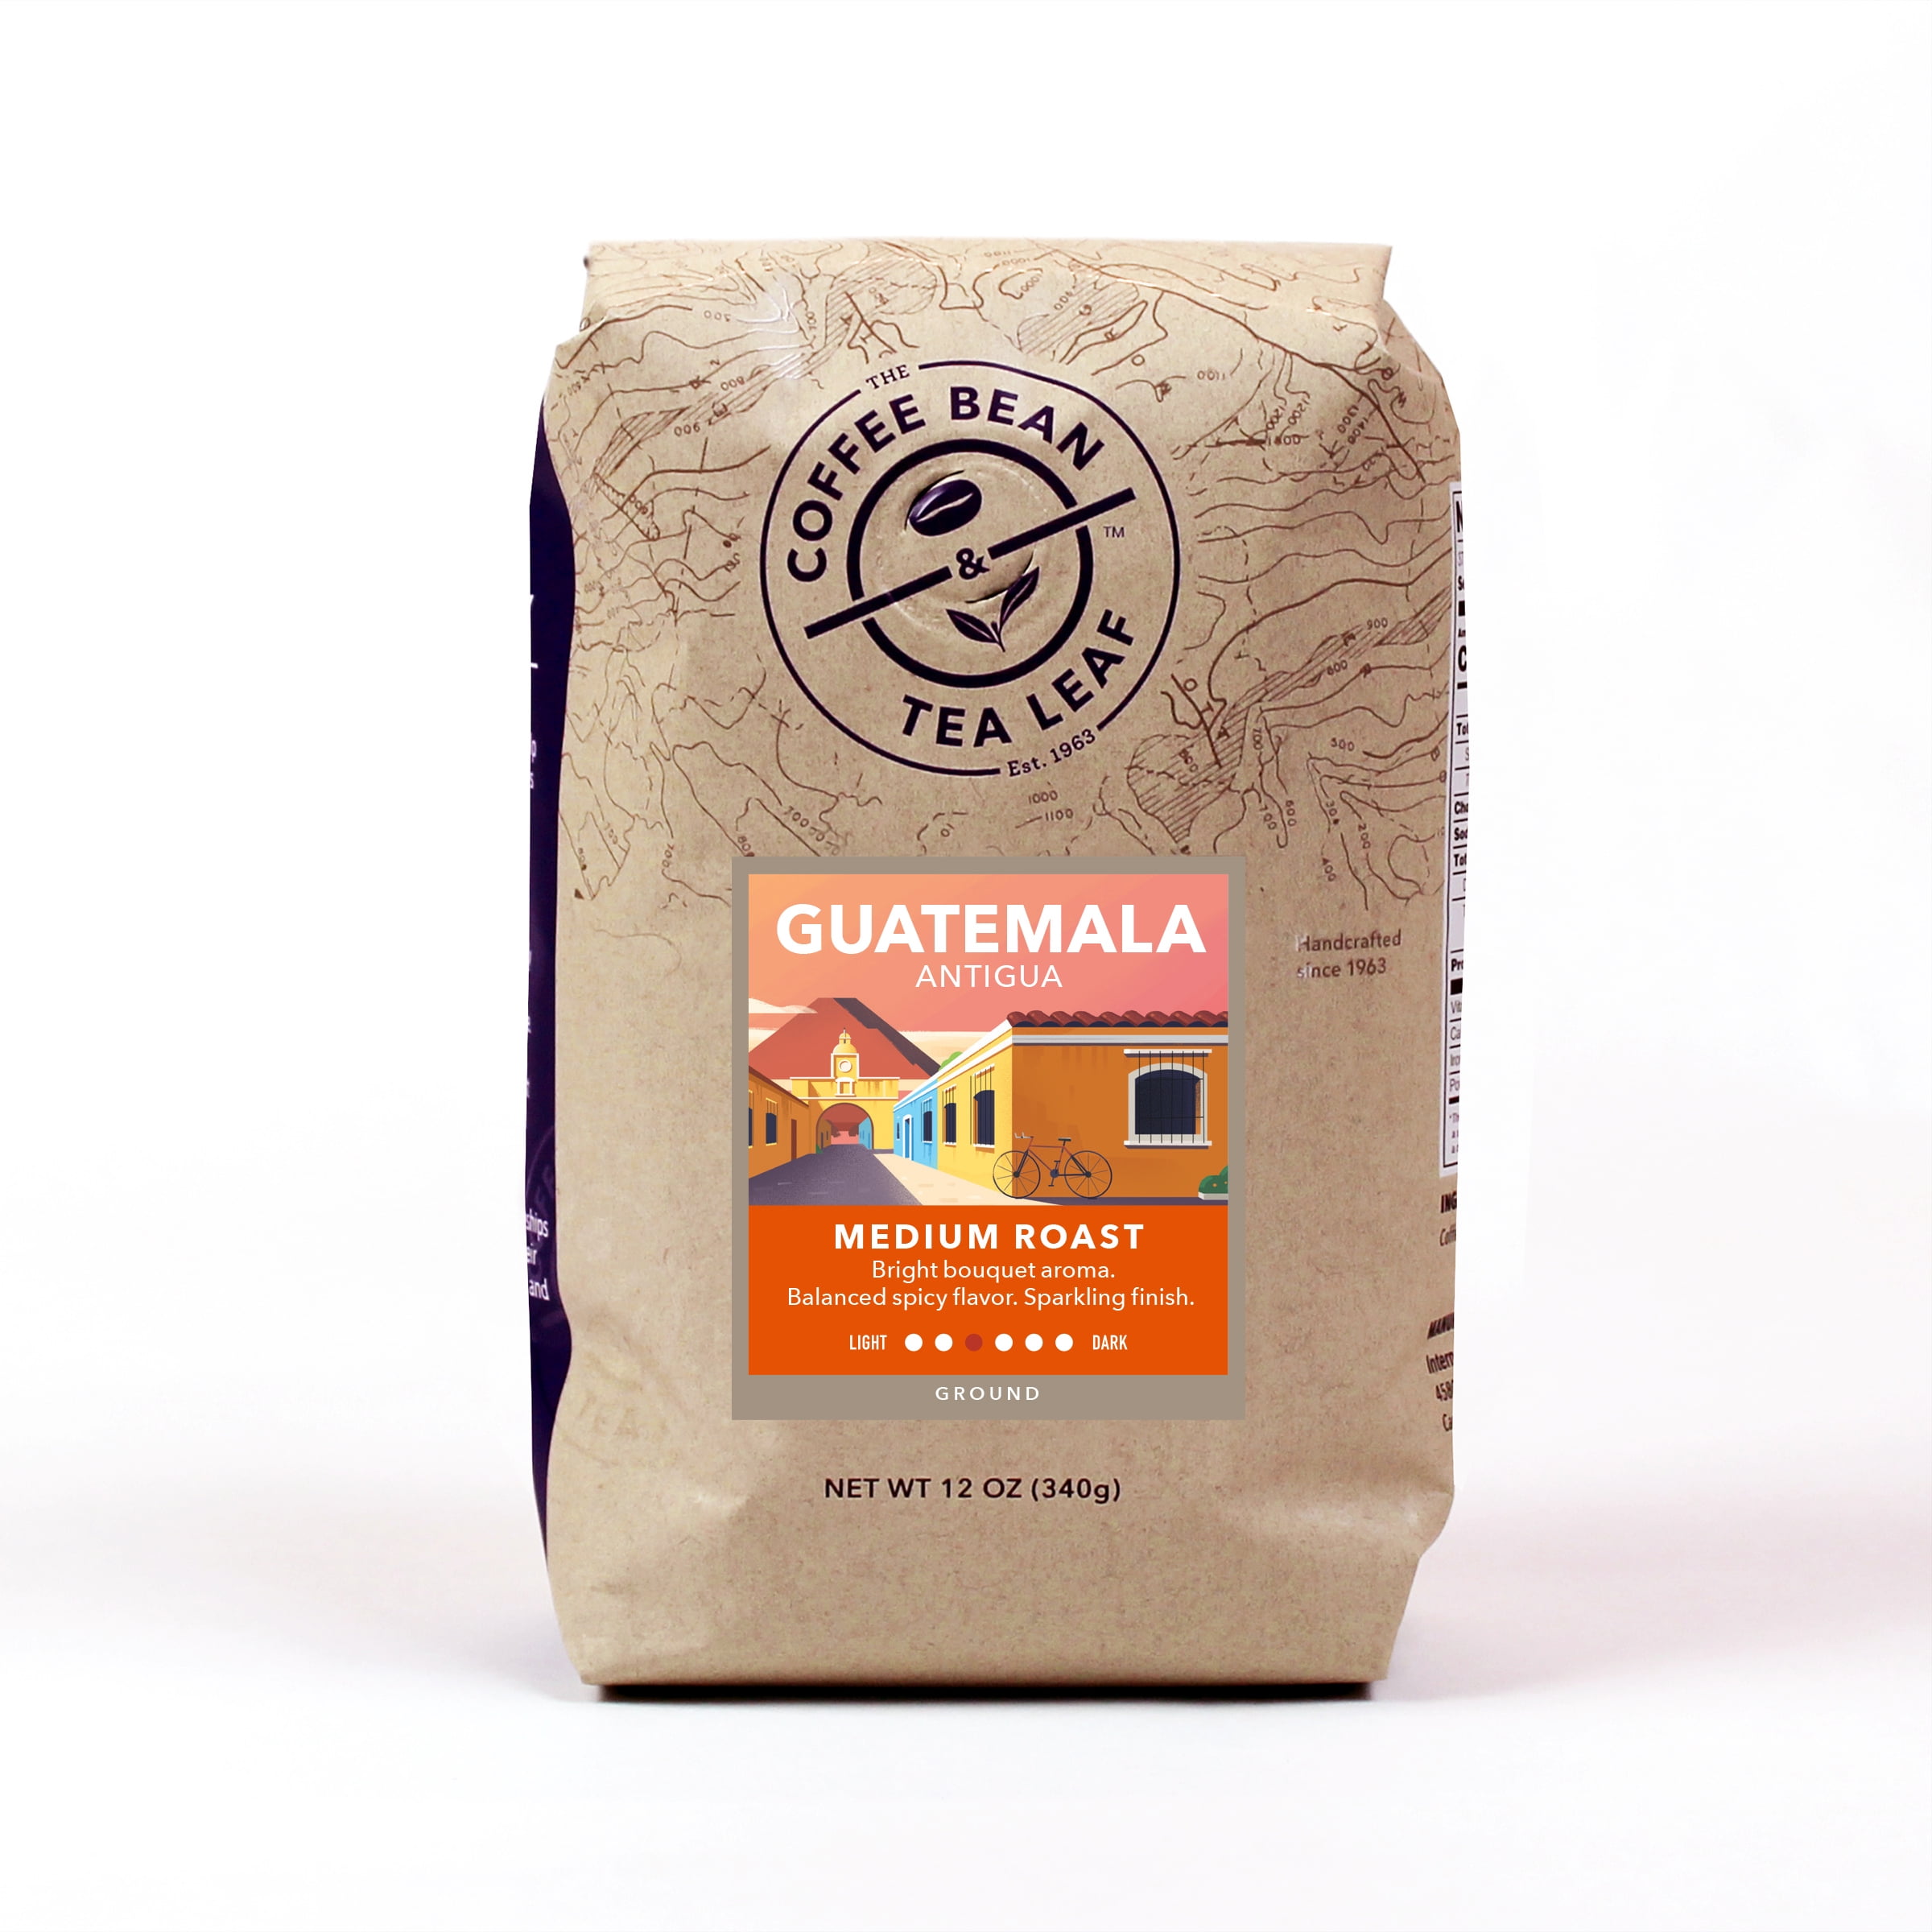 The Coffee Bean & Tea Leaf Guatemala Organic Medium Roast Ground Coffee